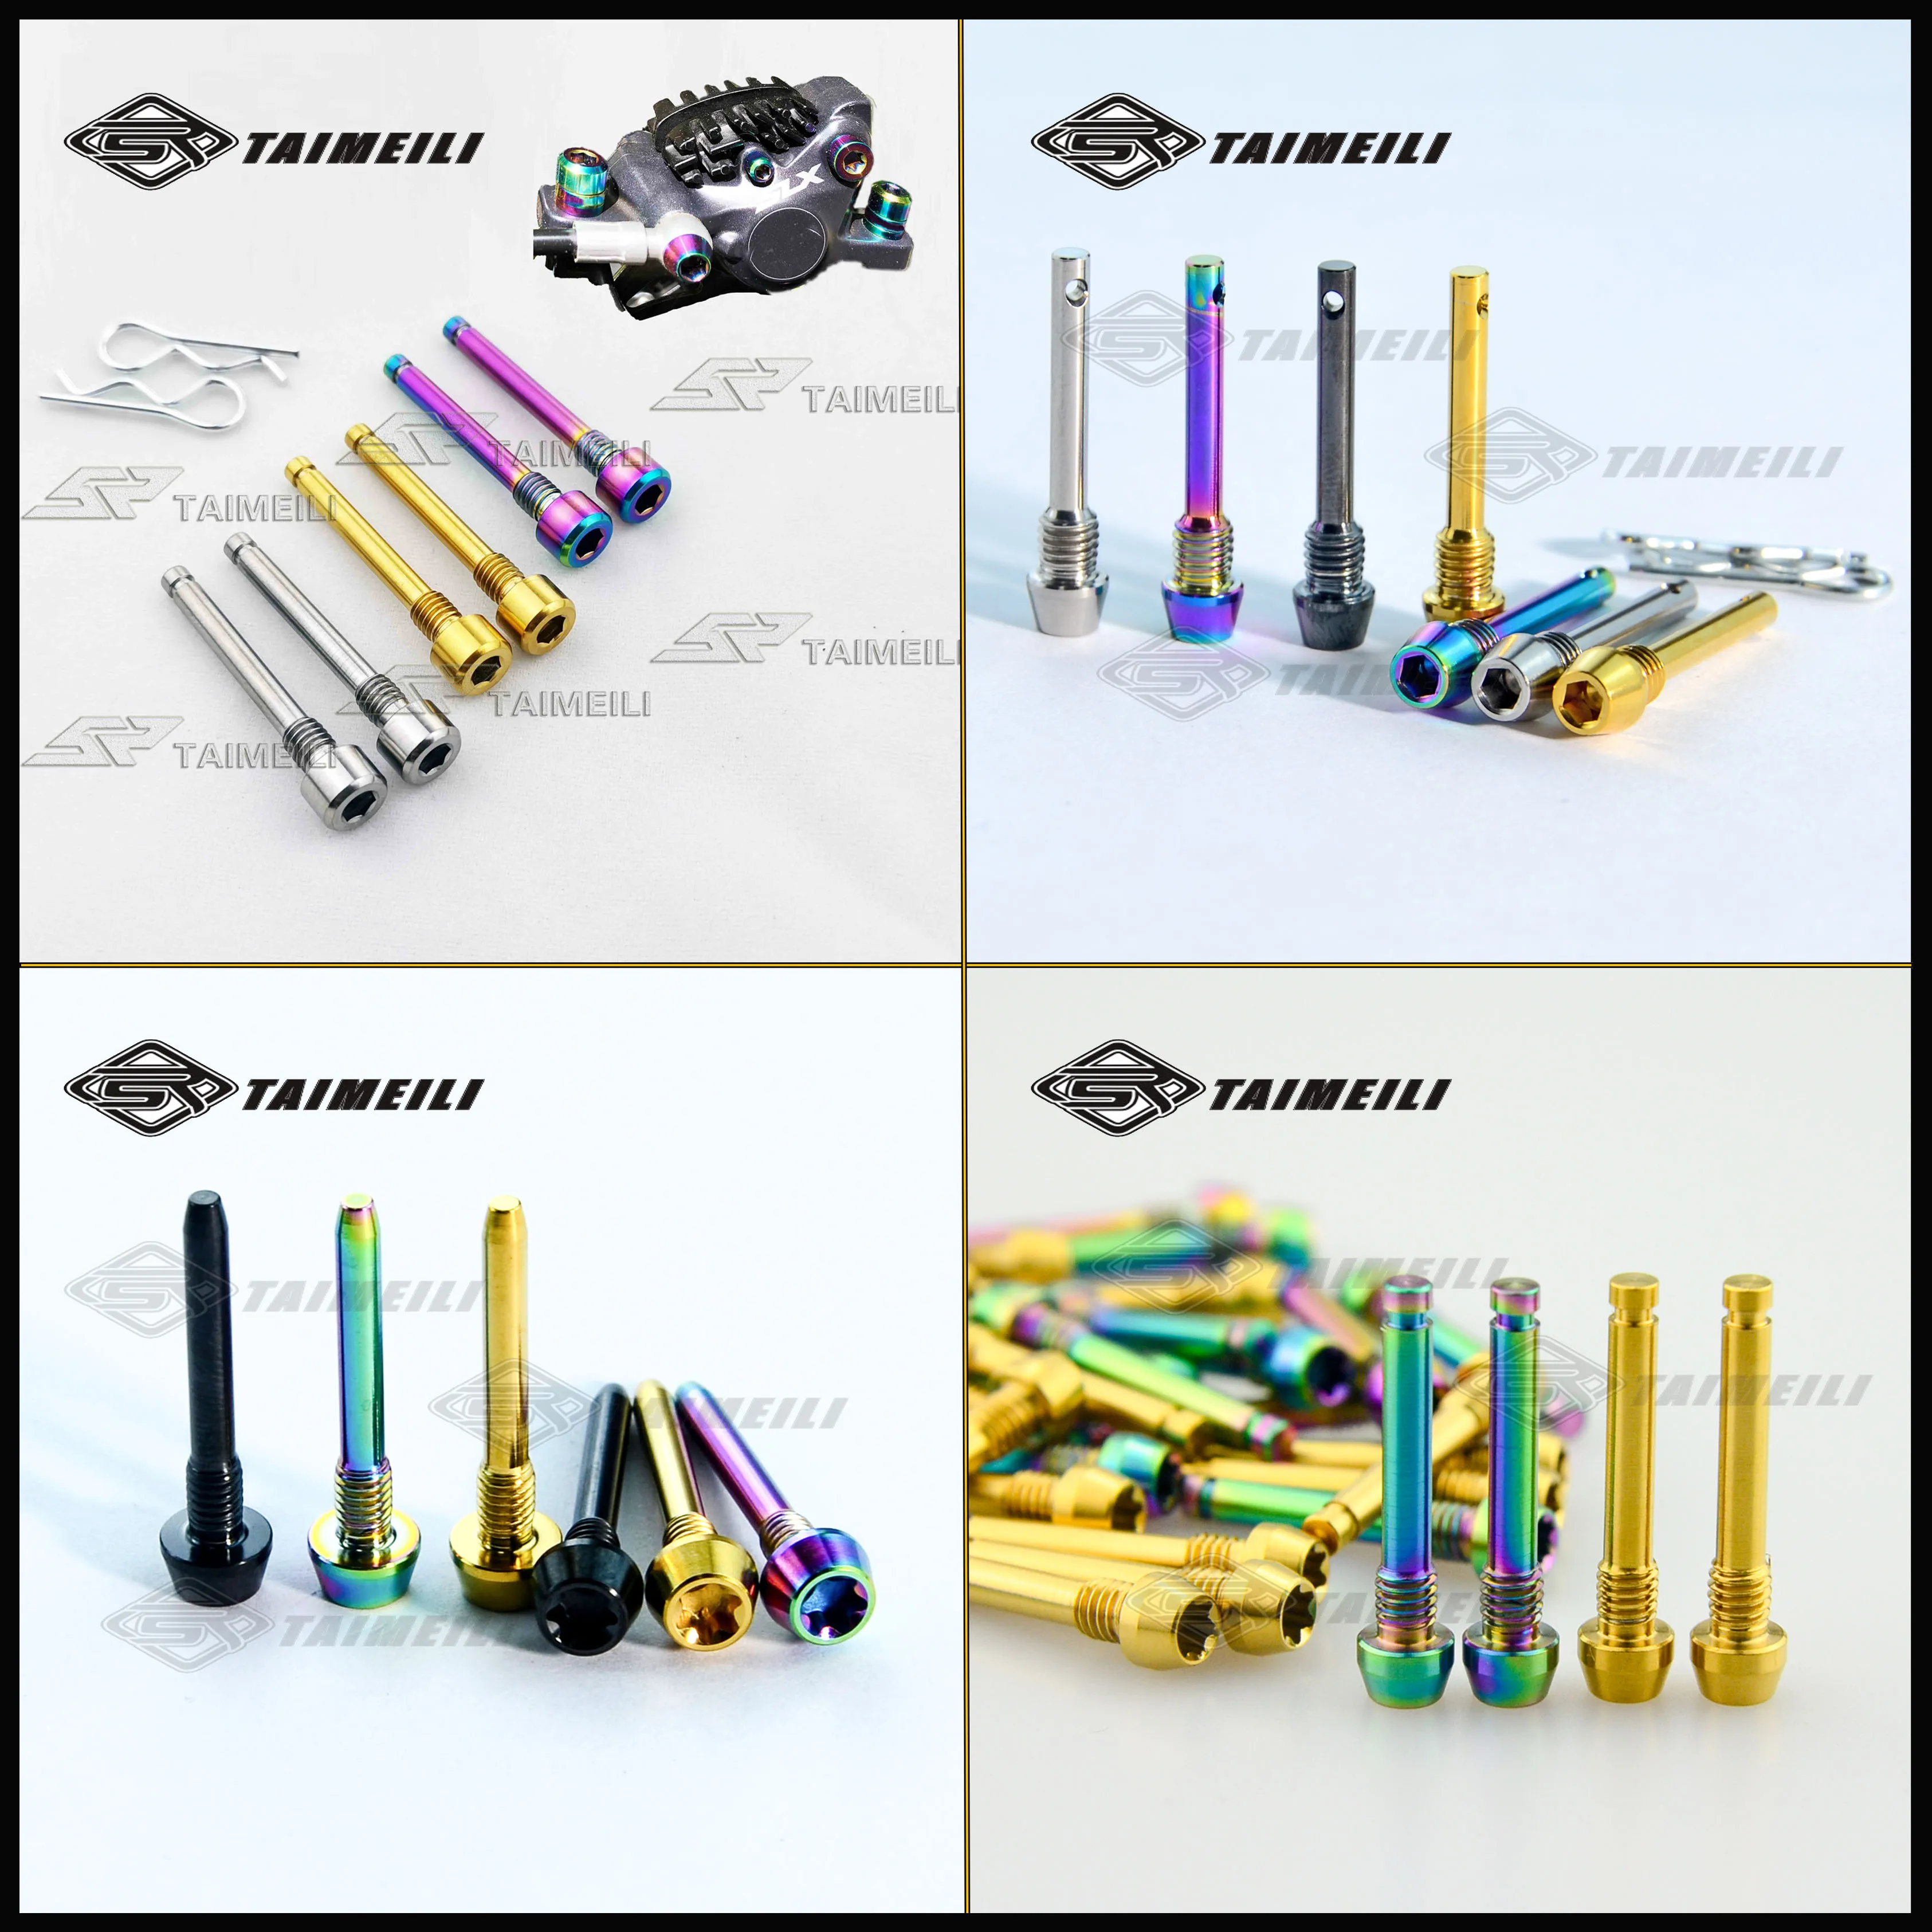 

TAIMEILI 2pcs M4m5 titanium alloy bolts and titanium pin insert screws for bicycle oil brake pads